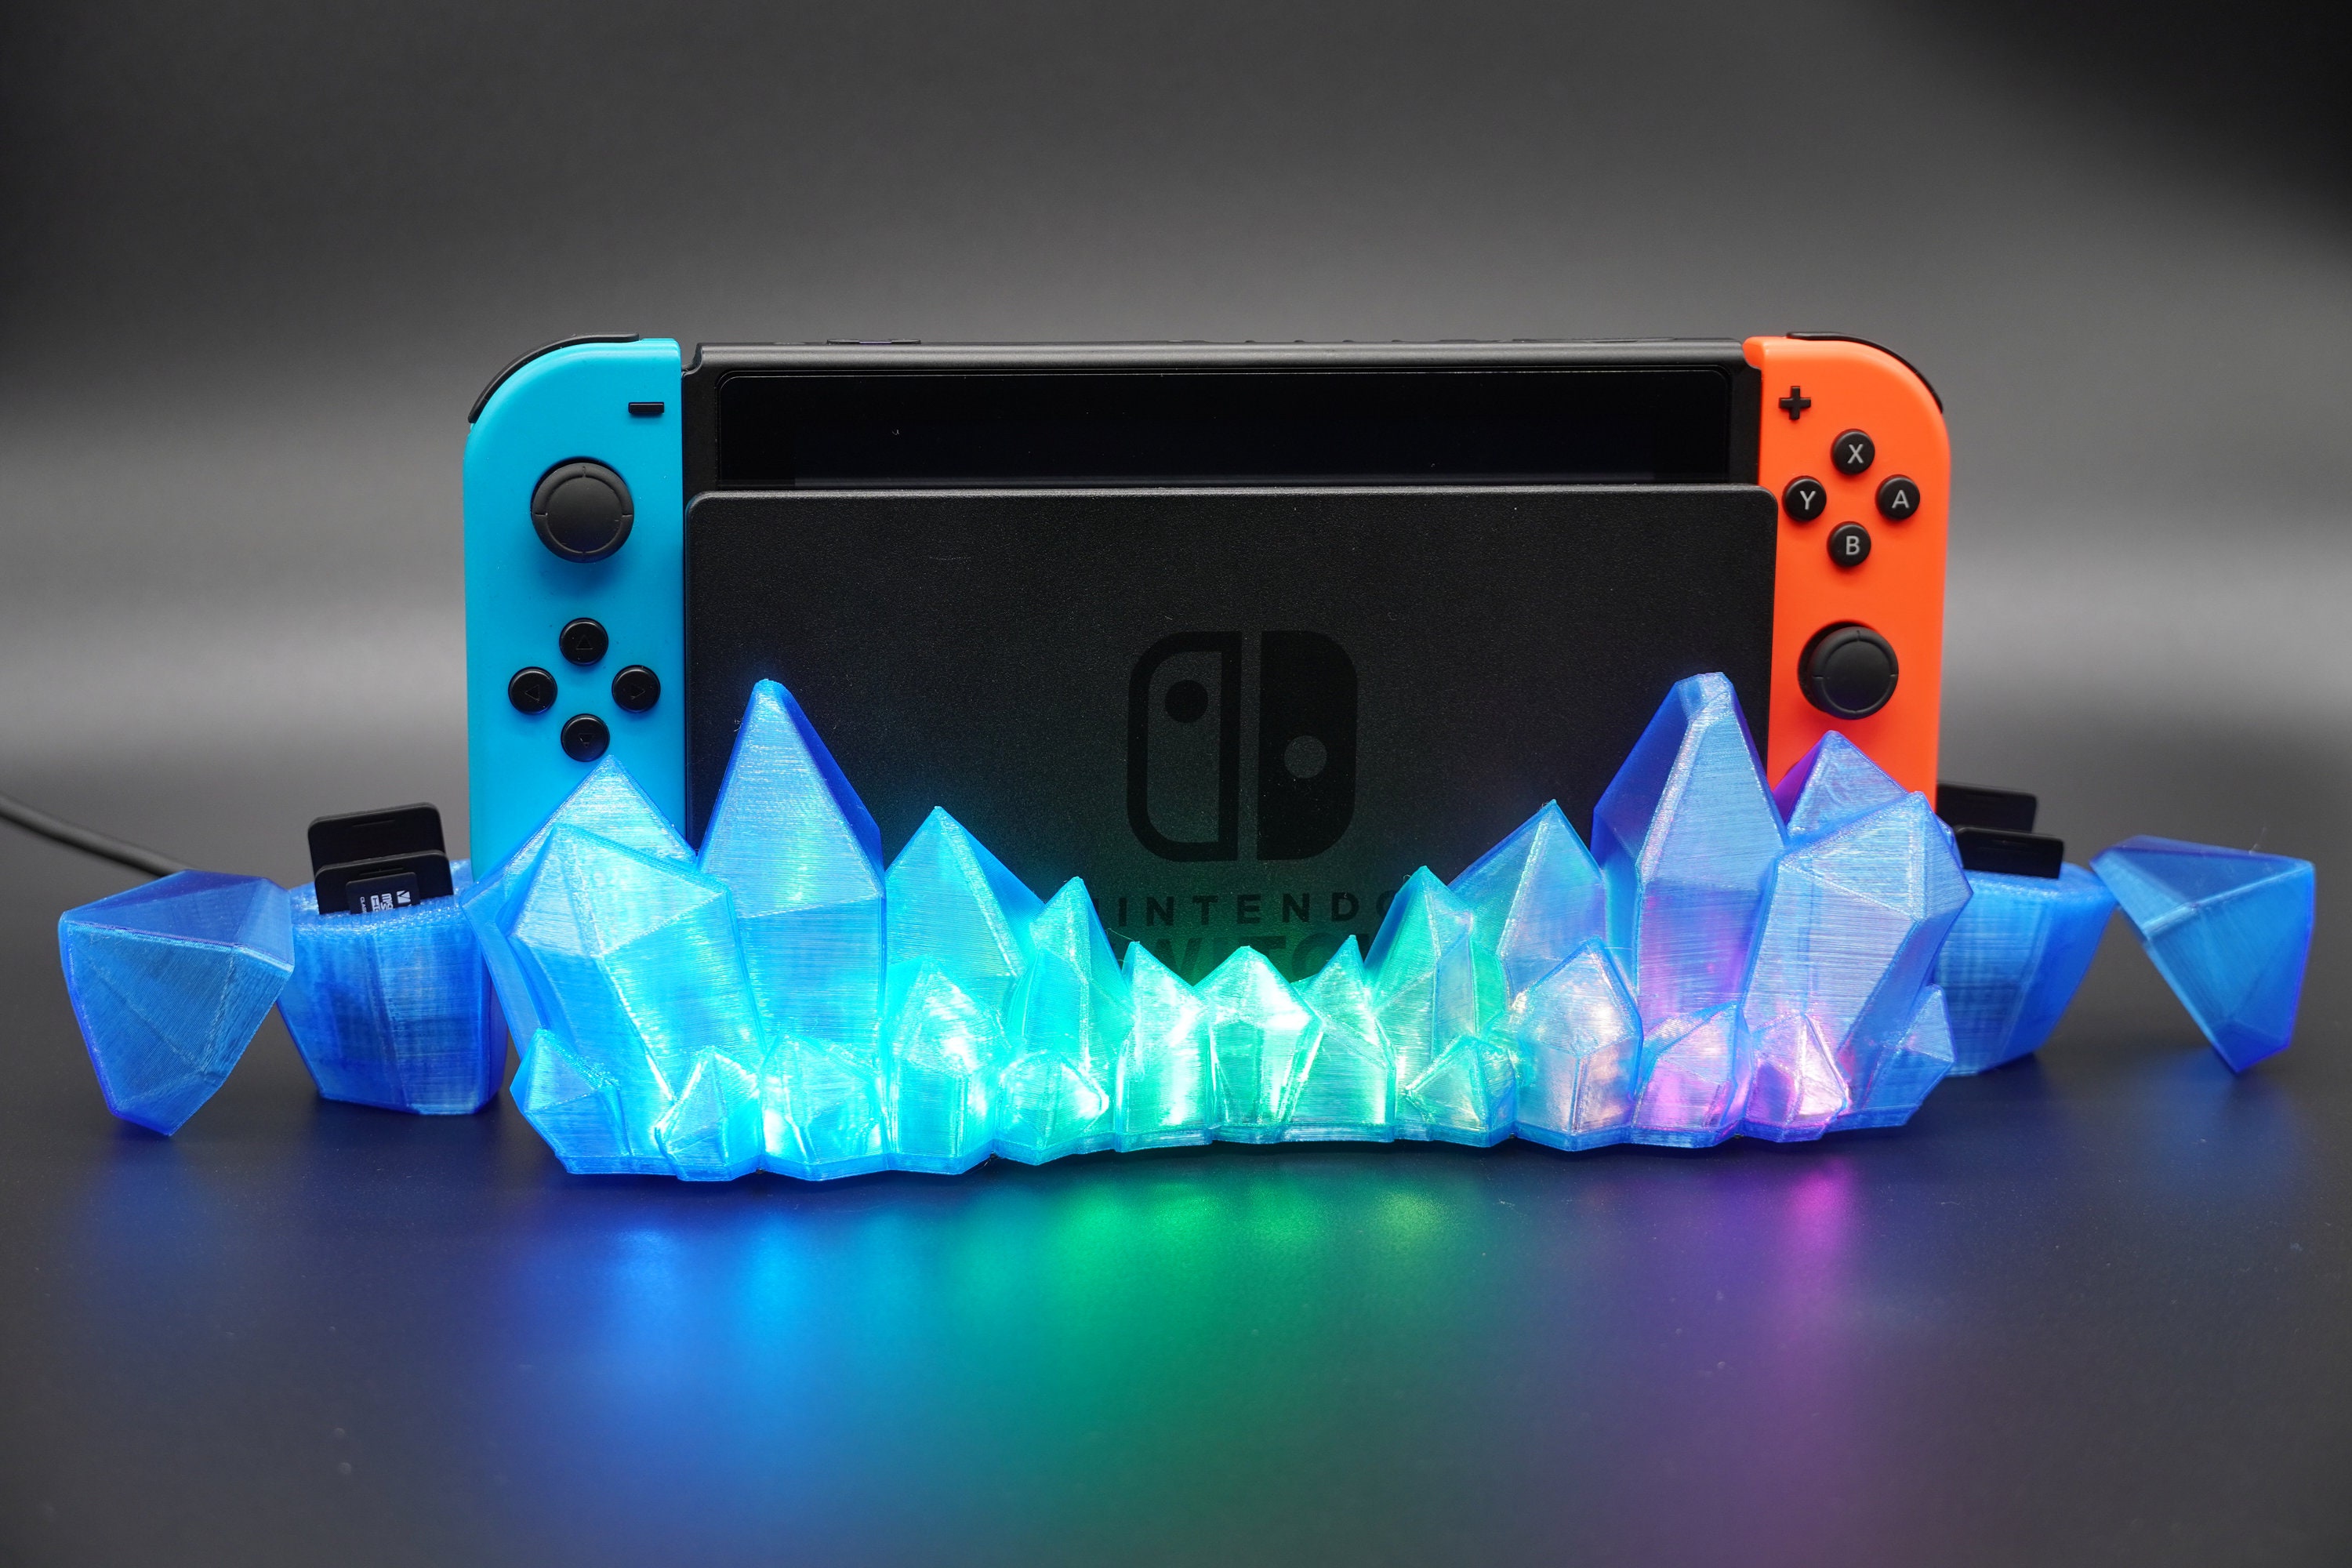 Nintendo switch light up dock - .de